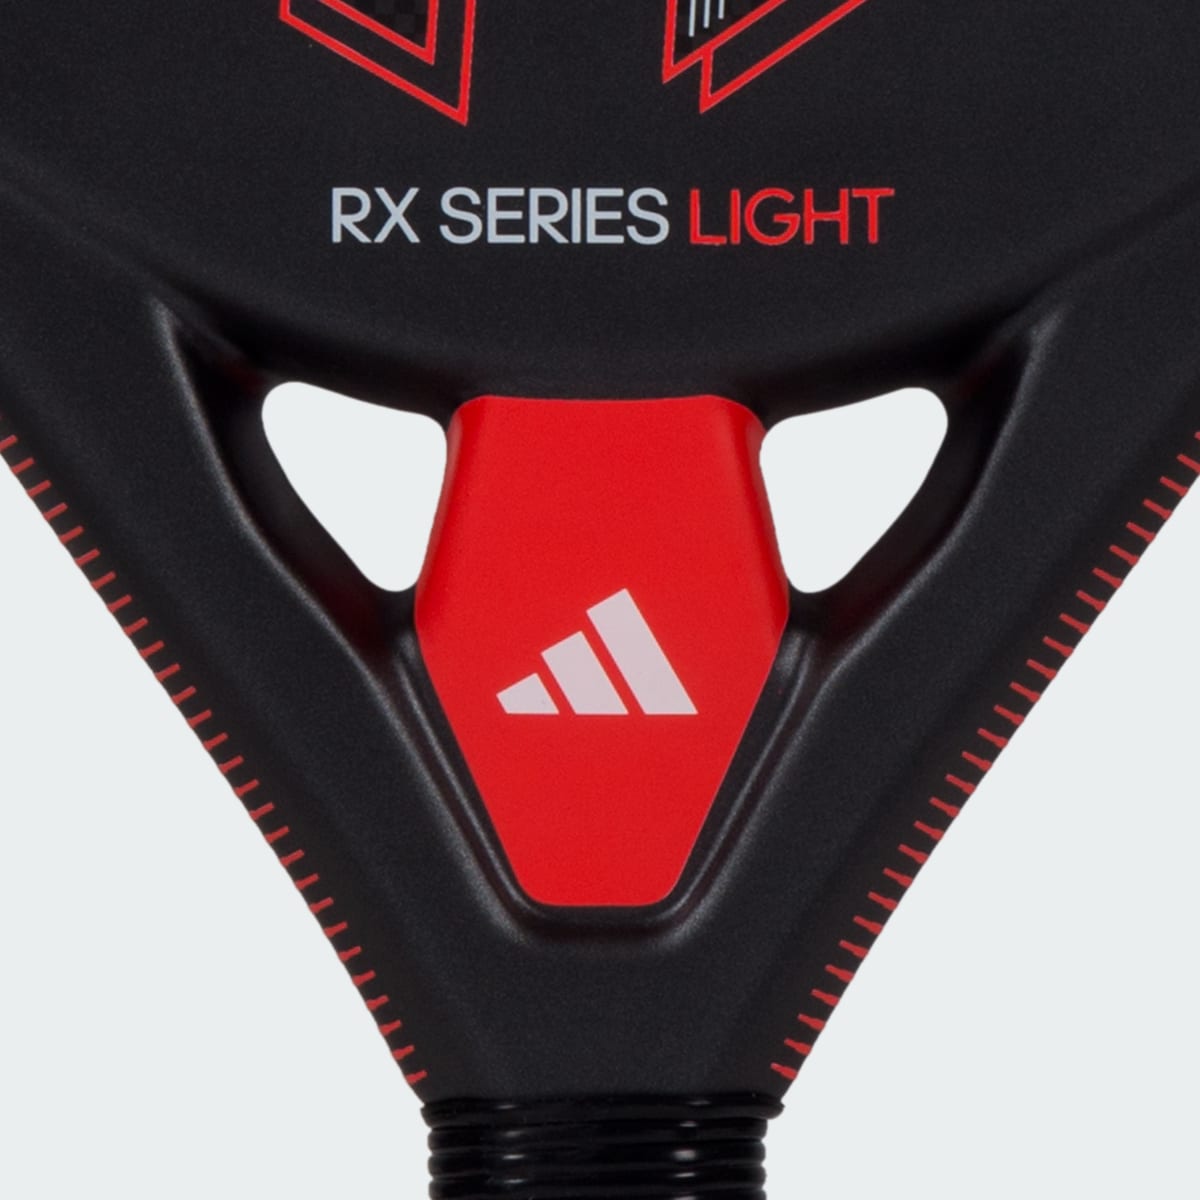 Adidas RX SERIES LIGHT. 5